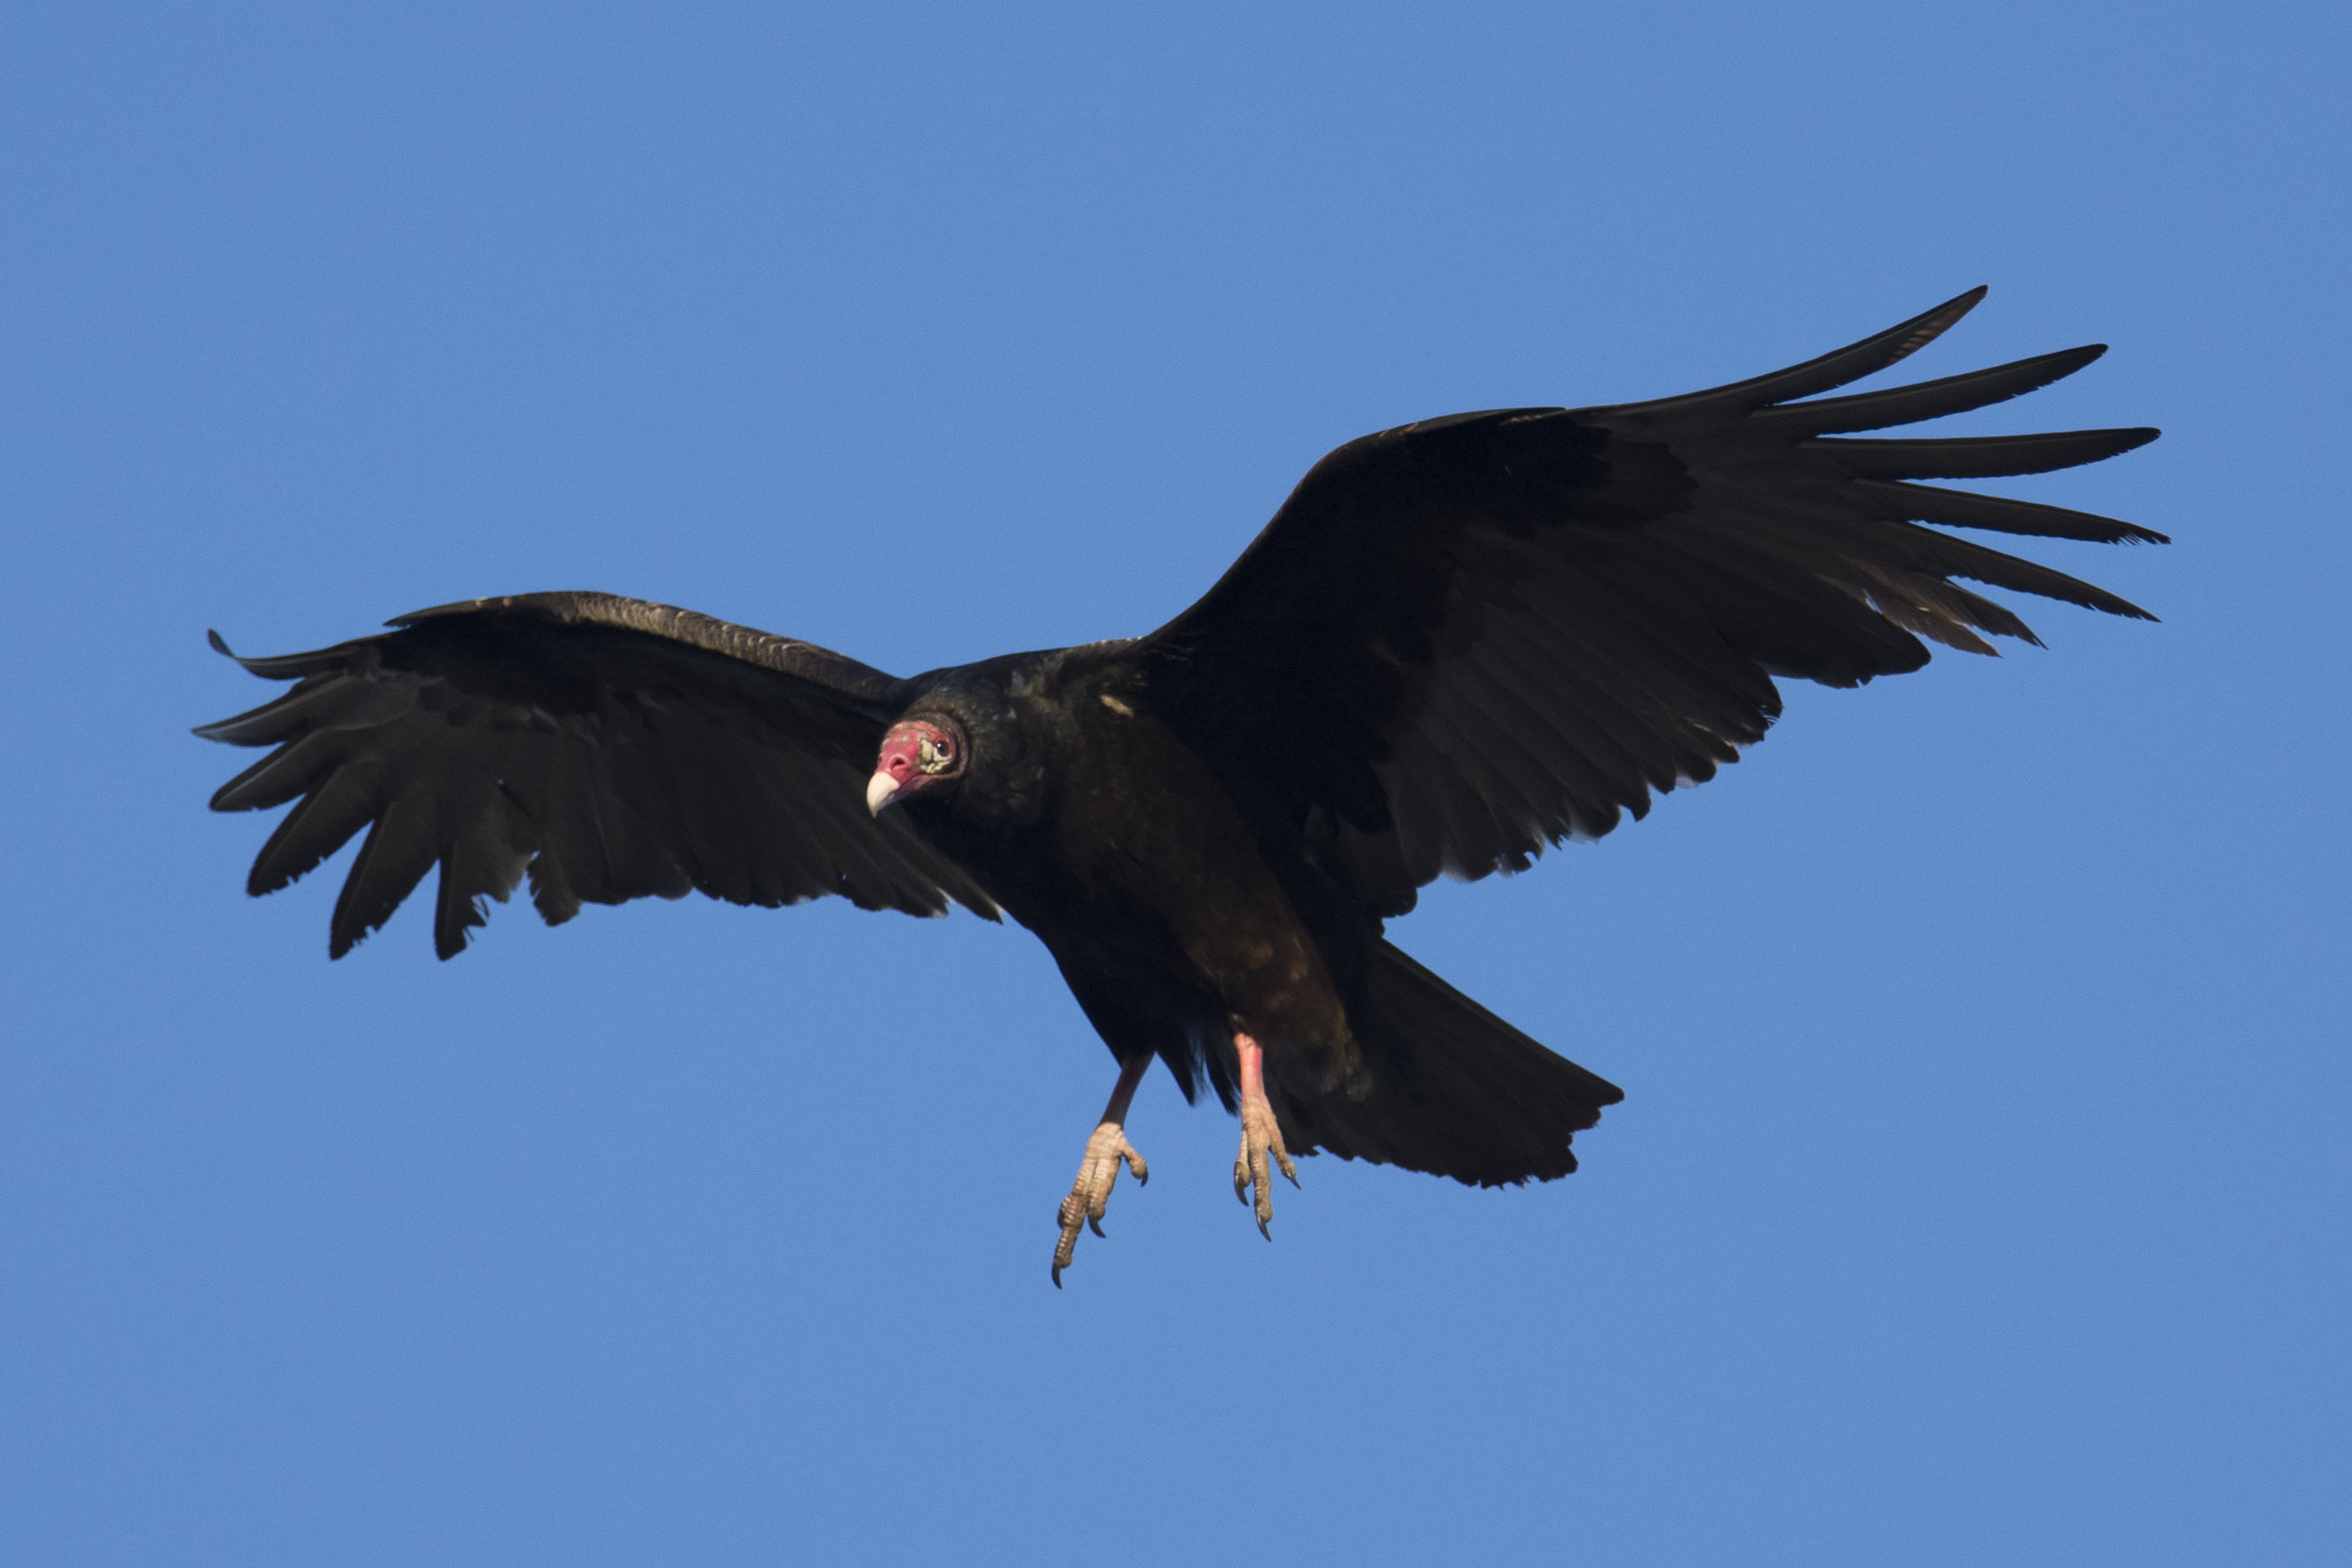  Turkey Vulture, 2018 